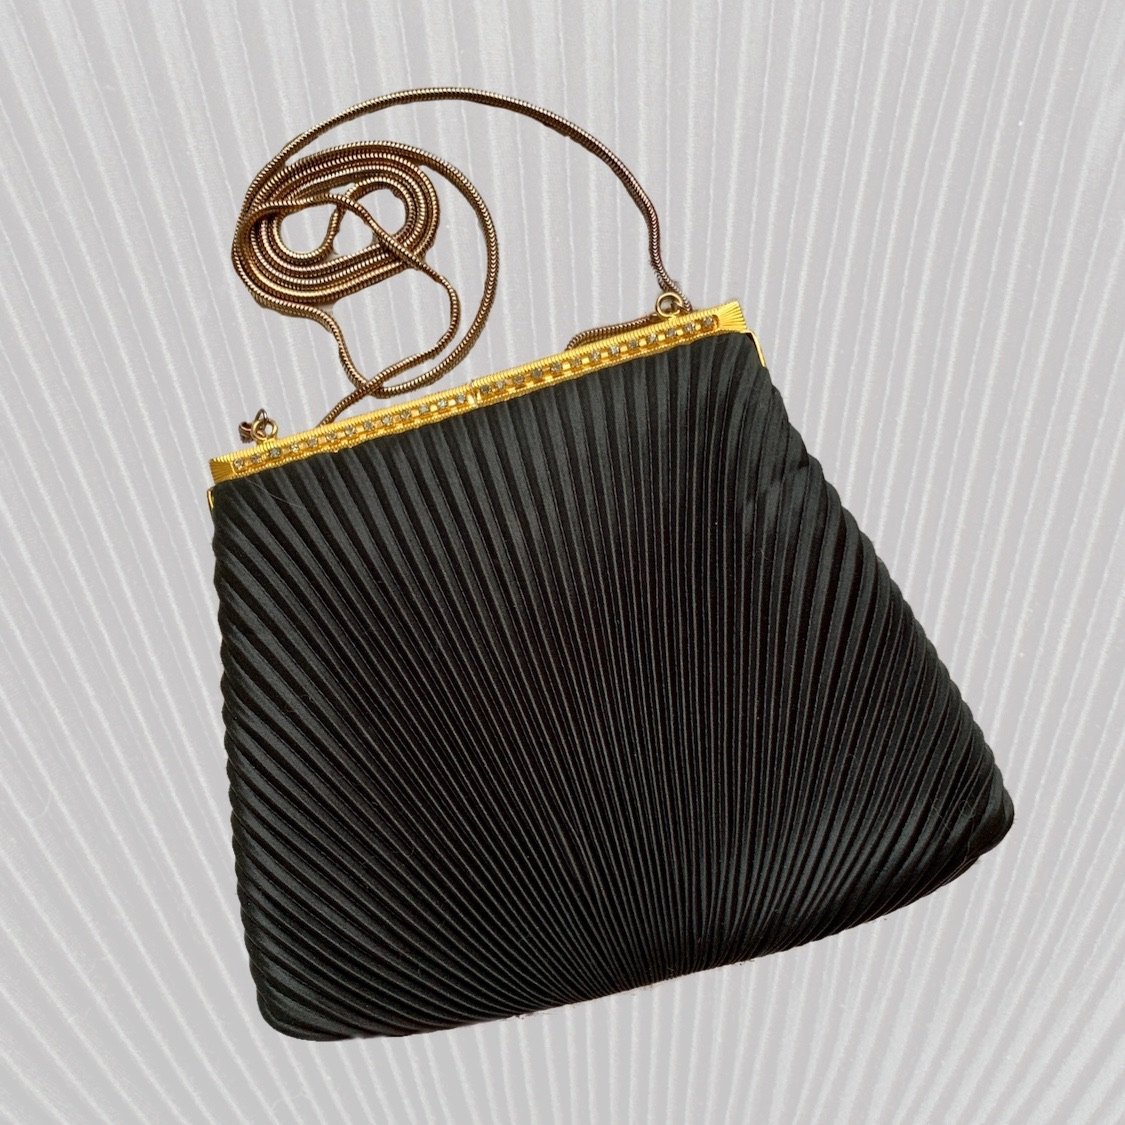 Vintage 1970s Little Black Handbag by La Regale. Black Micro Pleats wi